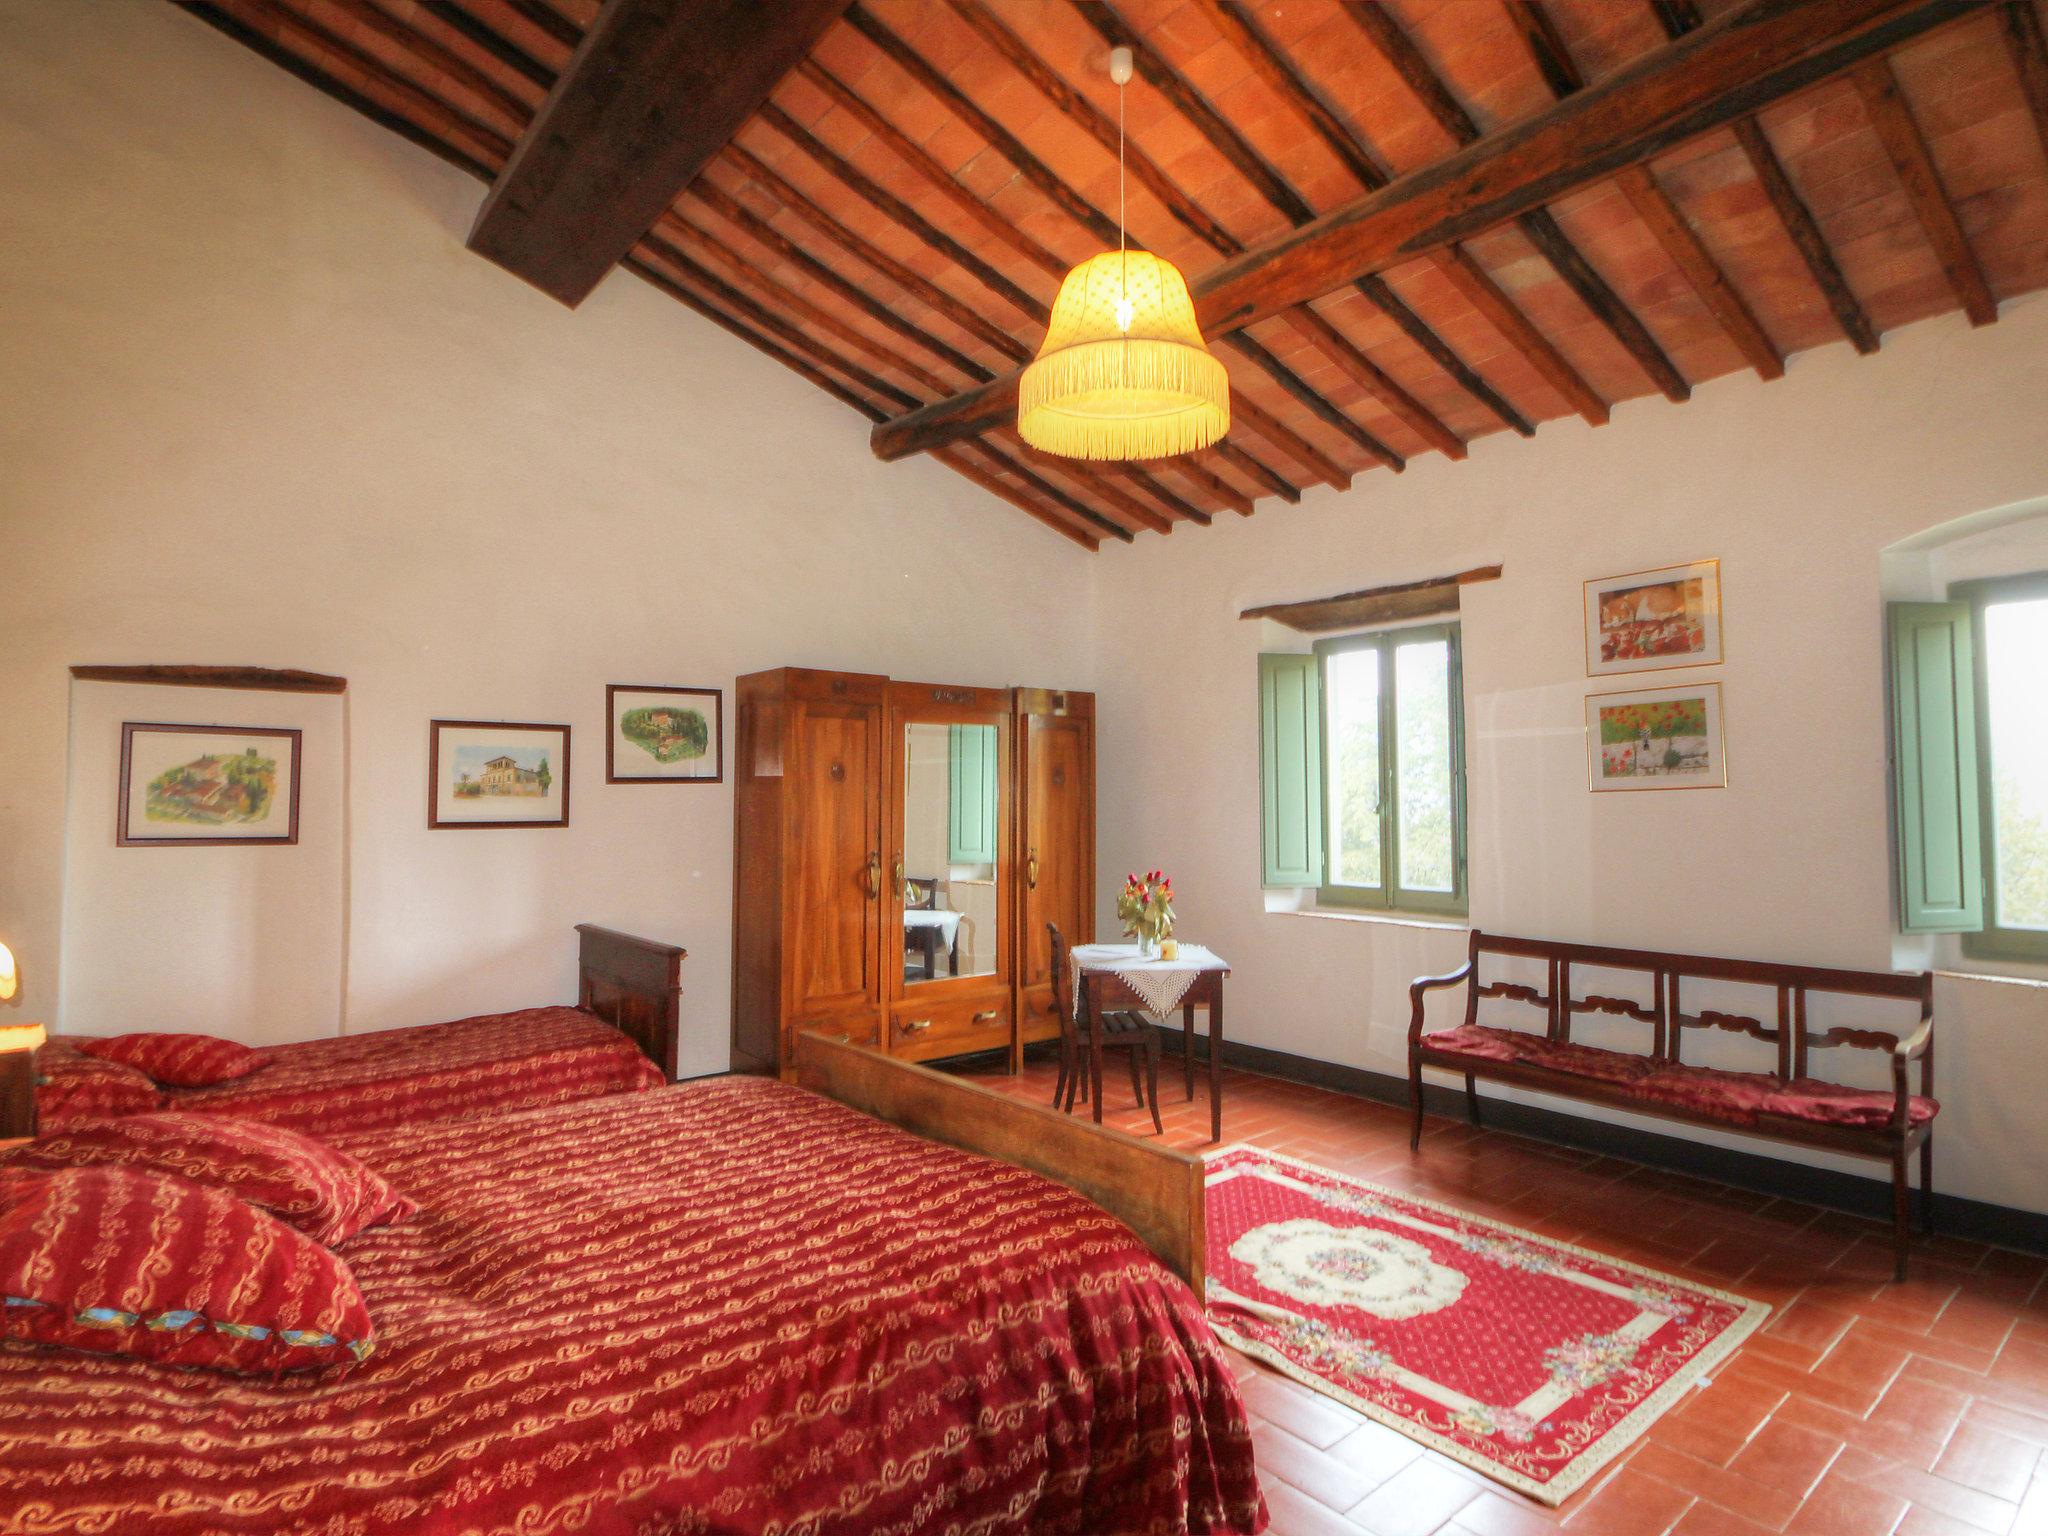 Photo 5 - Maison de 5 chambres à Radda in Chianti avec piscine et jardin